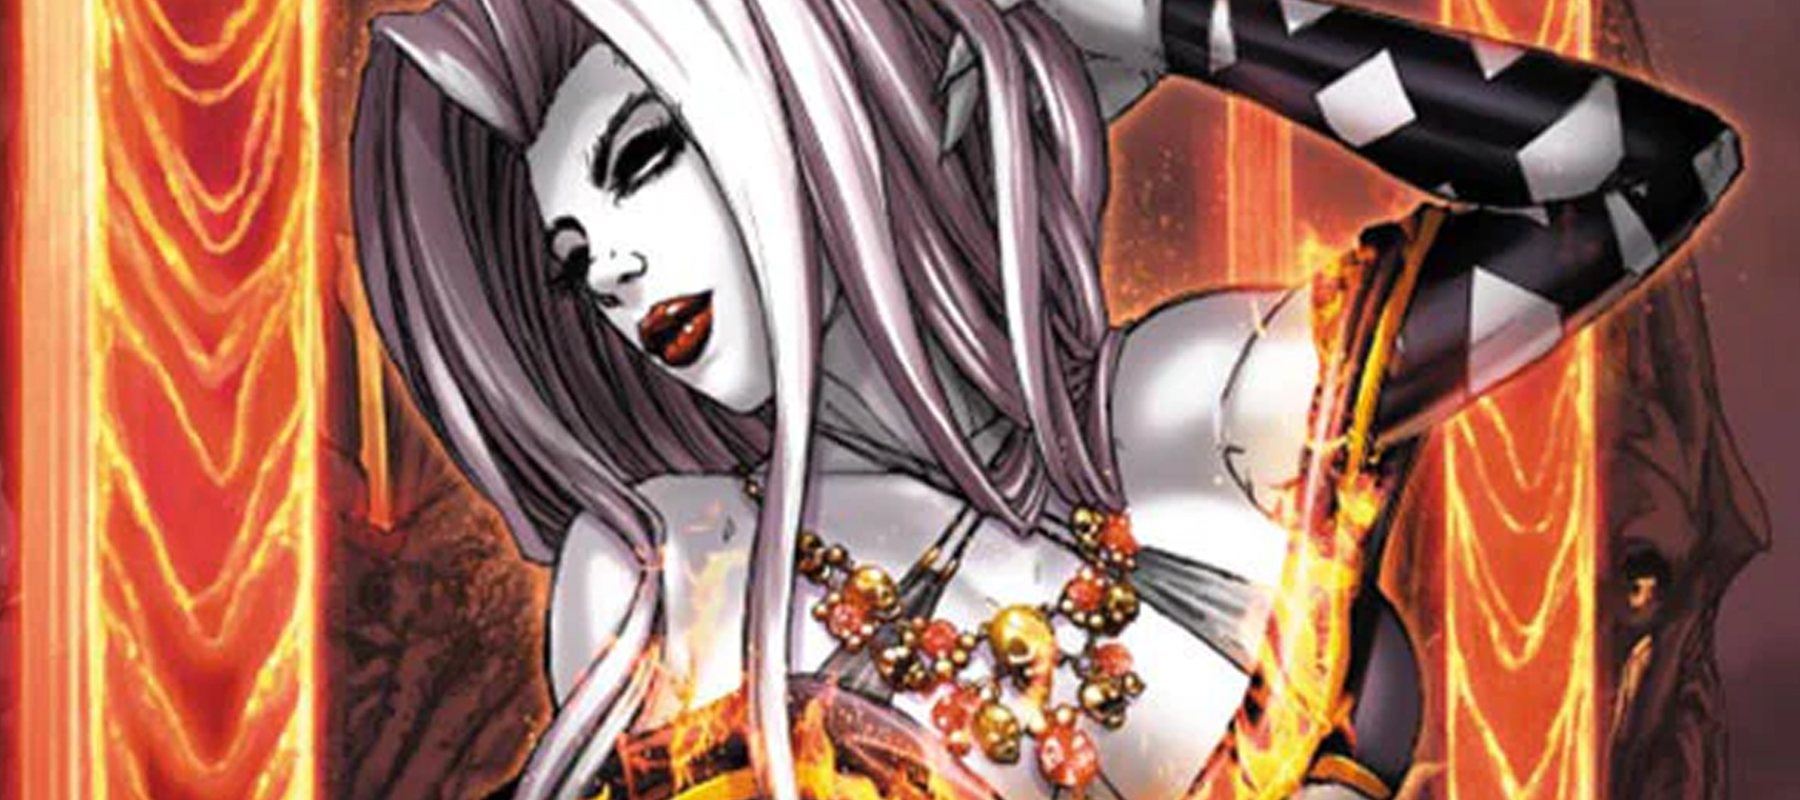 LADY DEATH horror dark demon satan goddess fantasy sexy babe 26 wallpaper   1600x1153  380699  WallpaperUP